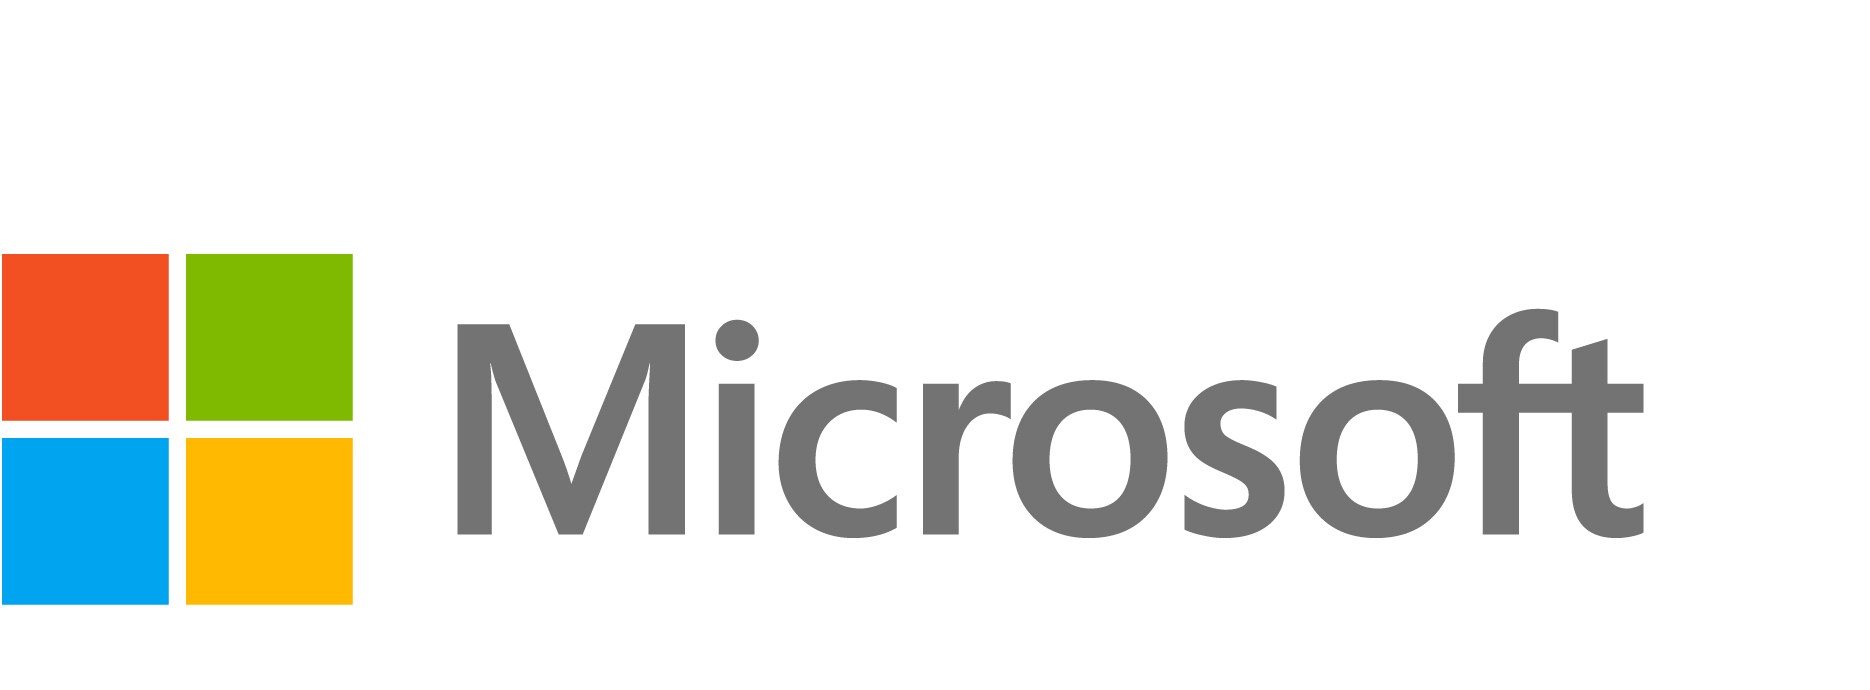 Microsoft Dynamics 365 Customer Service Professional - subscription license (1 year) - 1 license